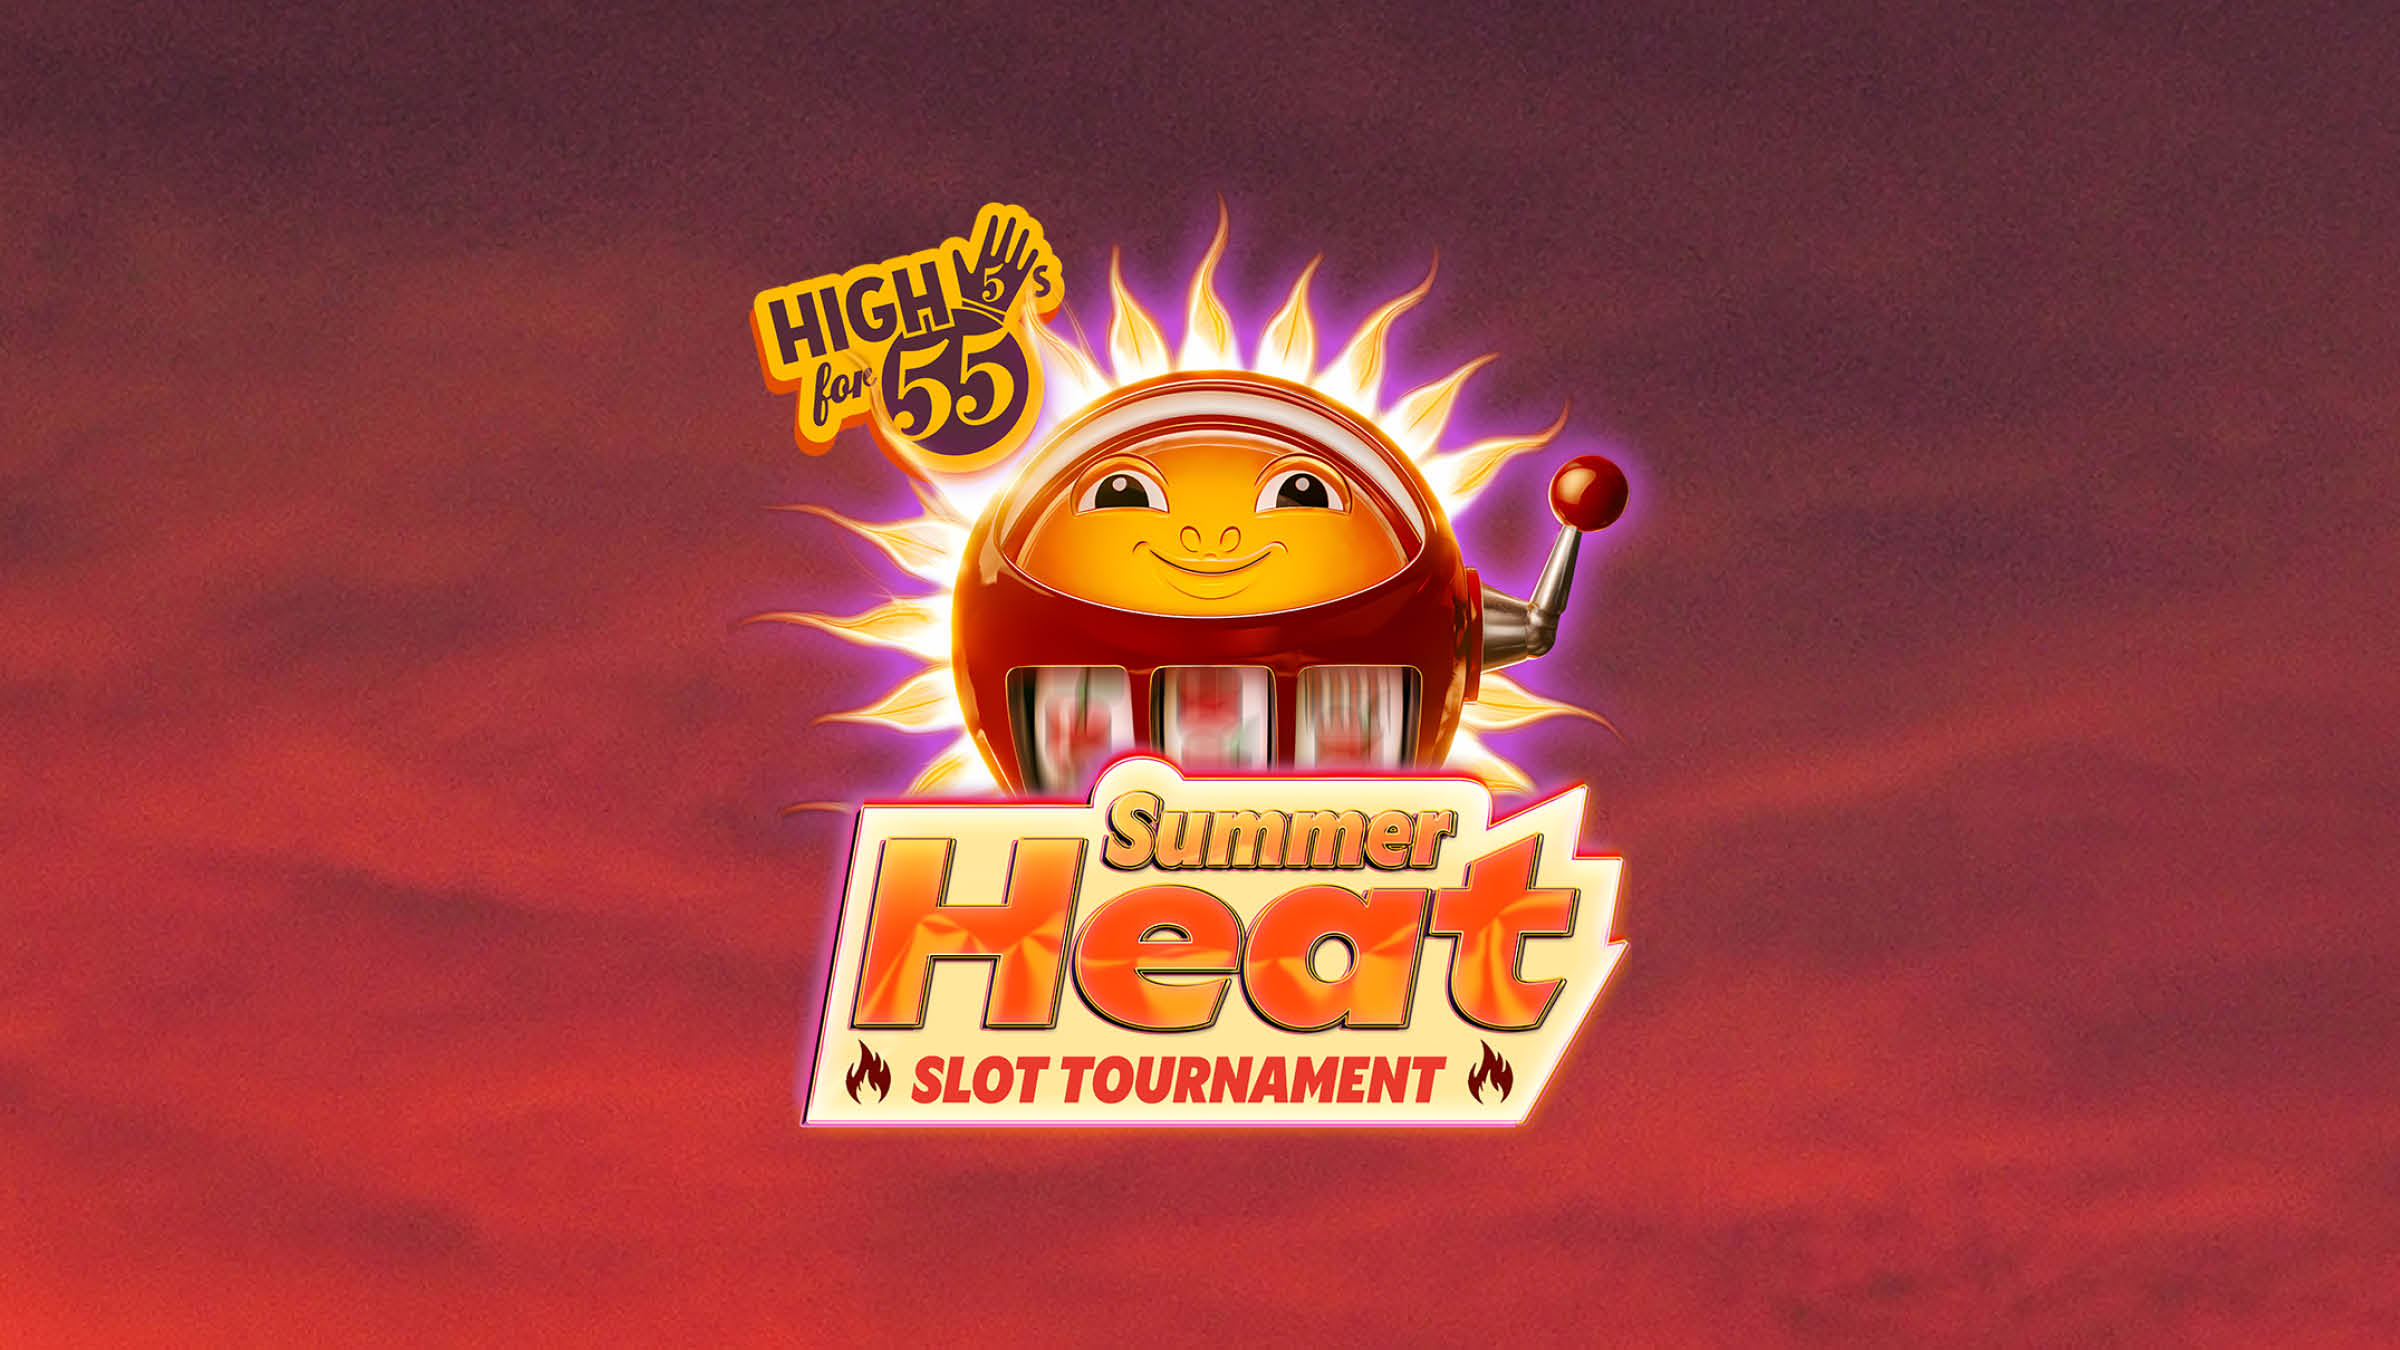 High 5s for 55's - SUMMER HEAT SLOT TOURNAMENT